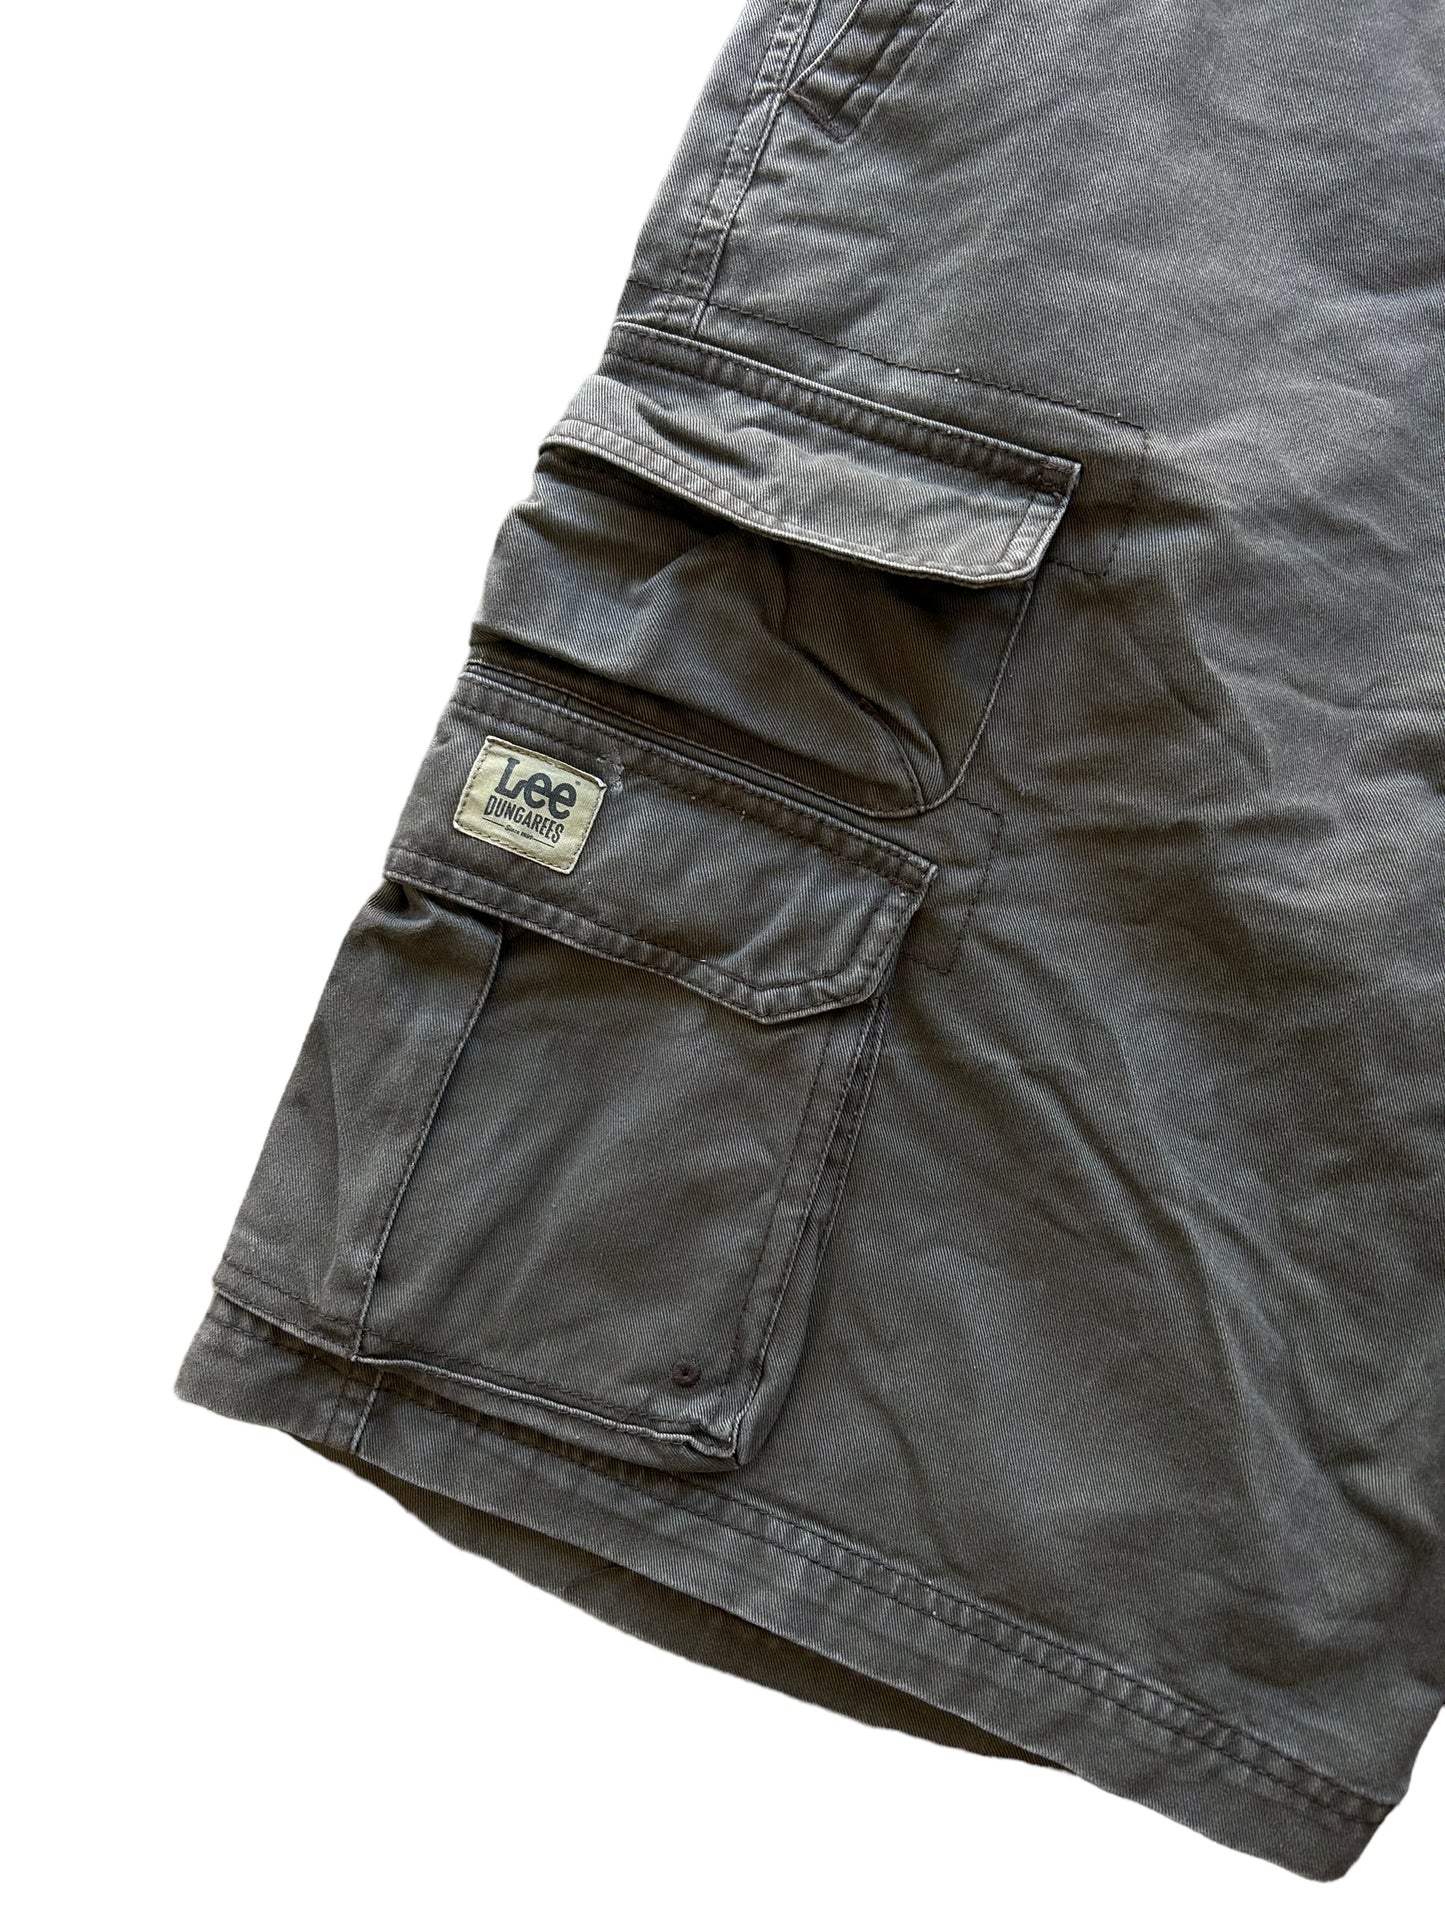 Vintage Lee Cargo Shorts